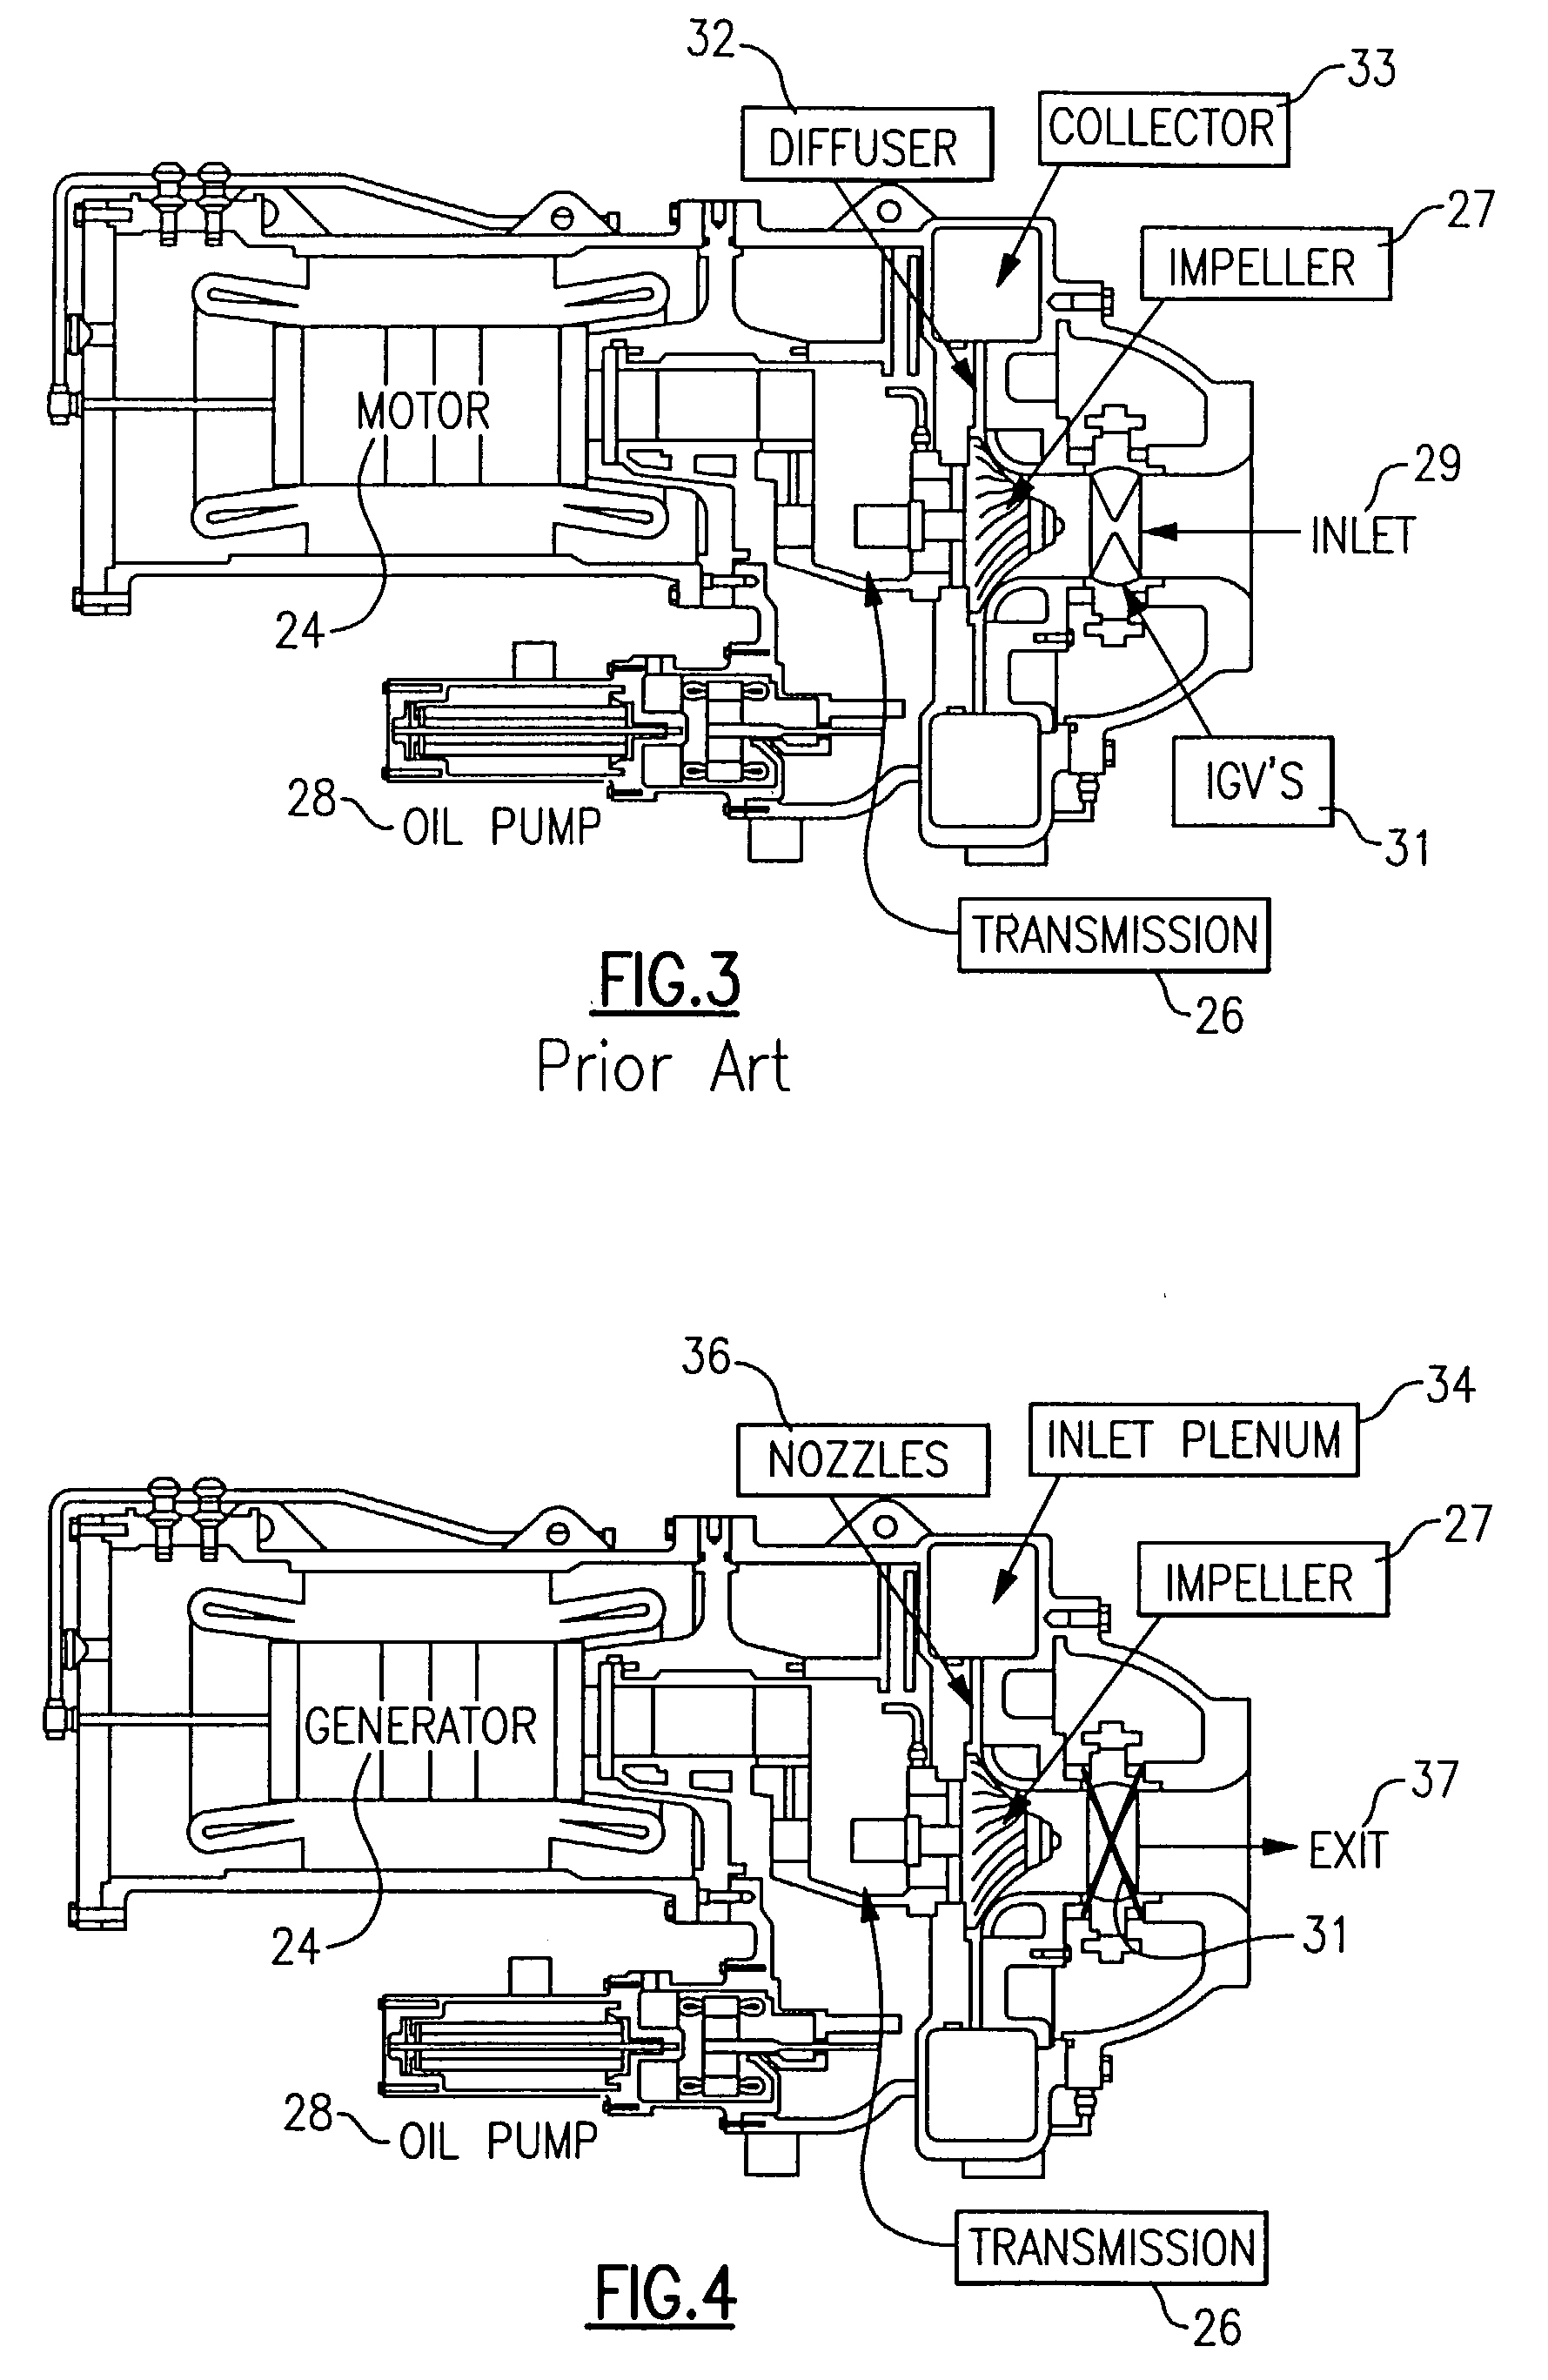 Dual-use radial turbomachine